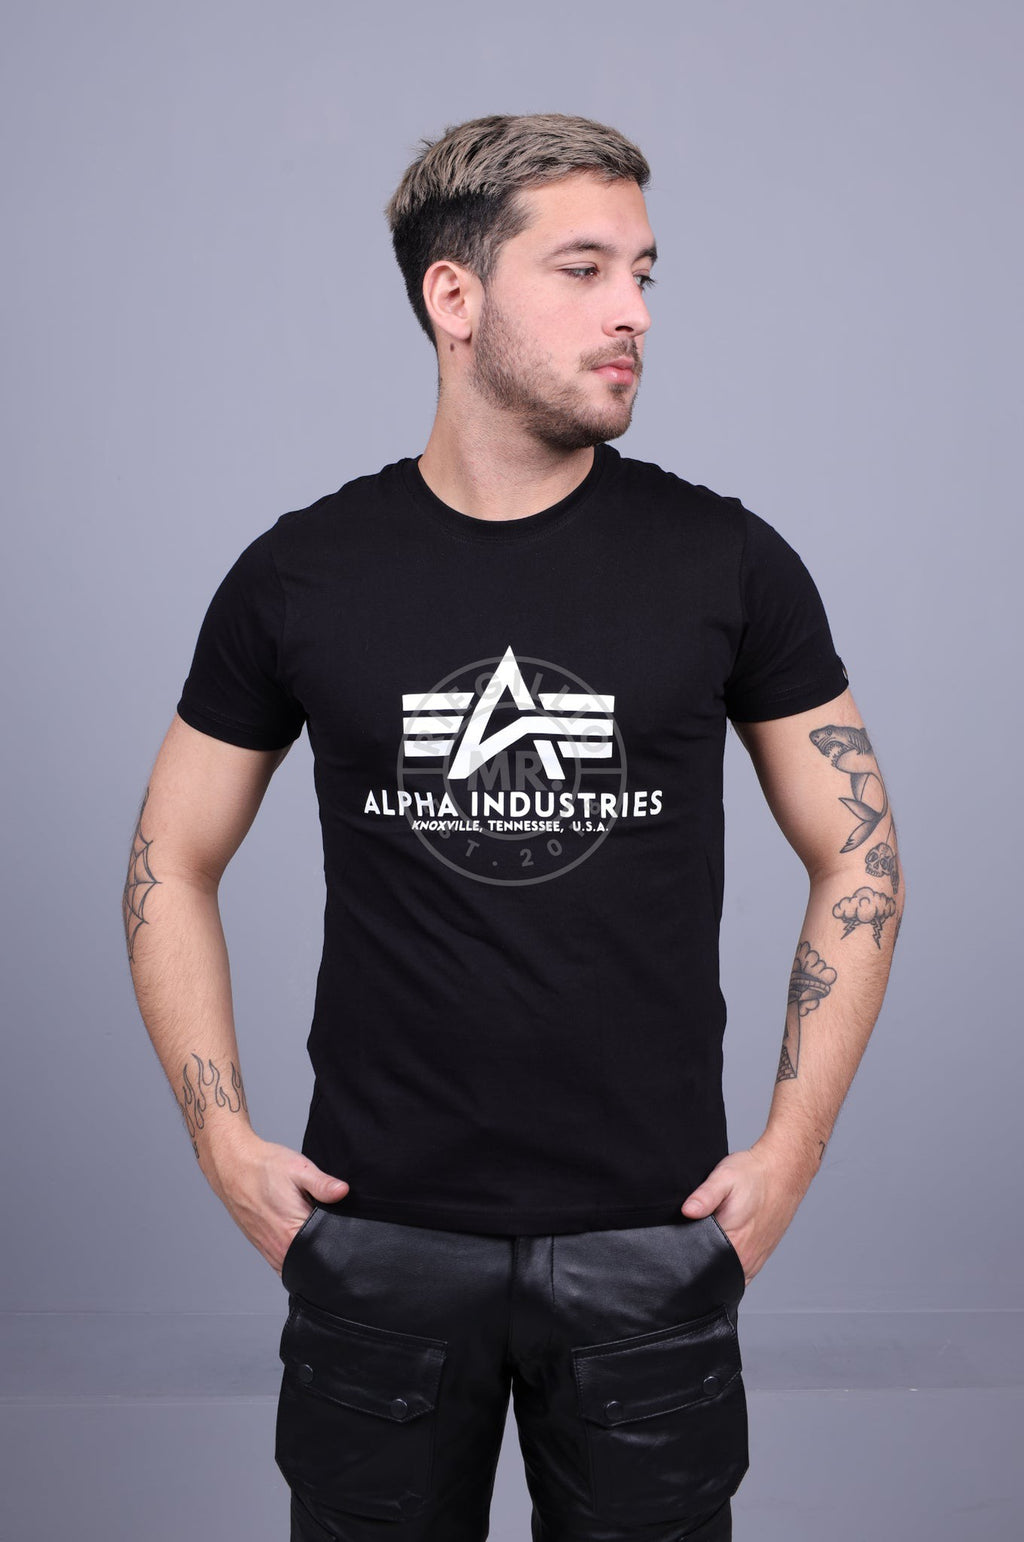 Industries MR. Alpha Black Riegillio by T-Shirt Basic